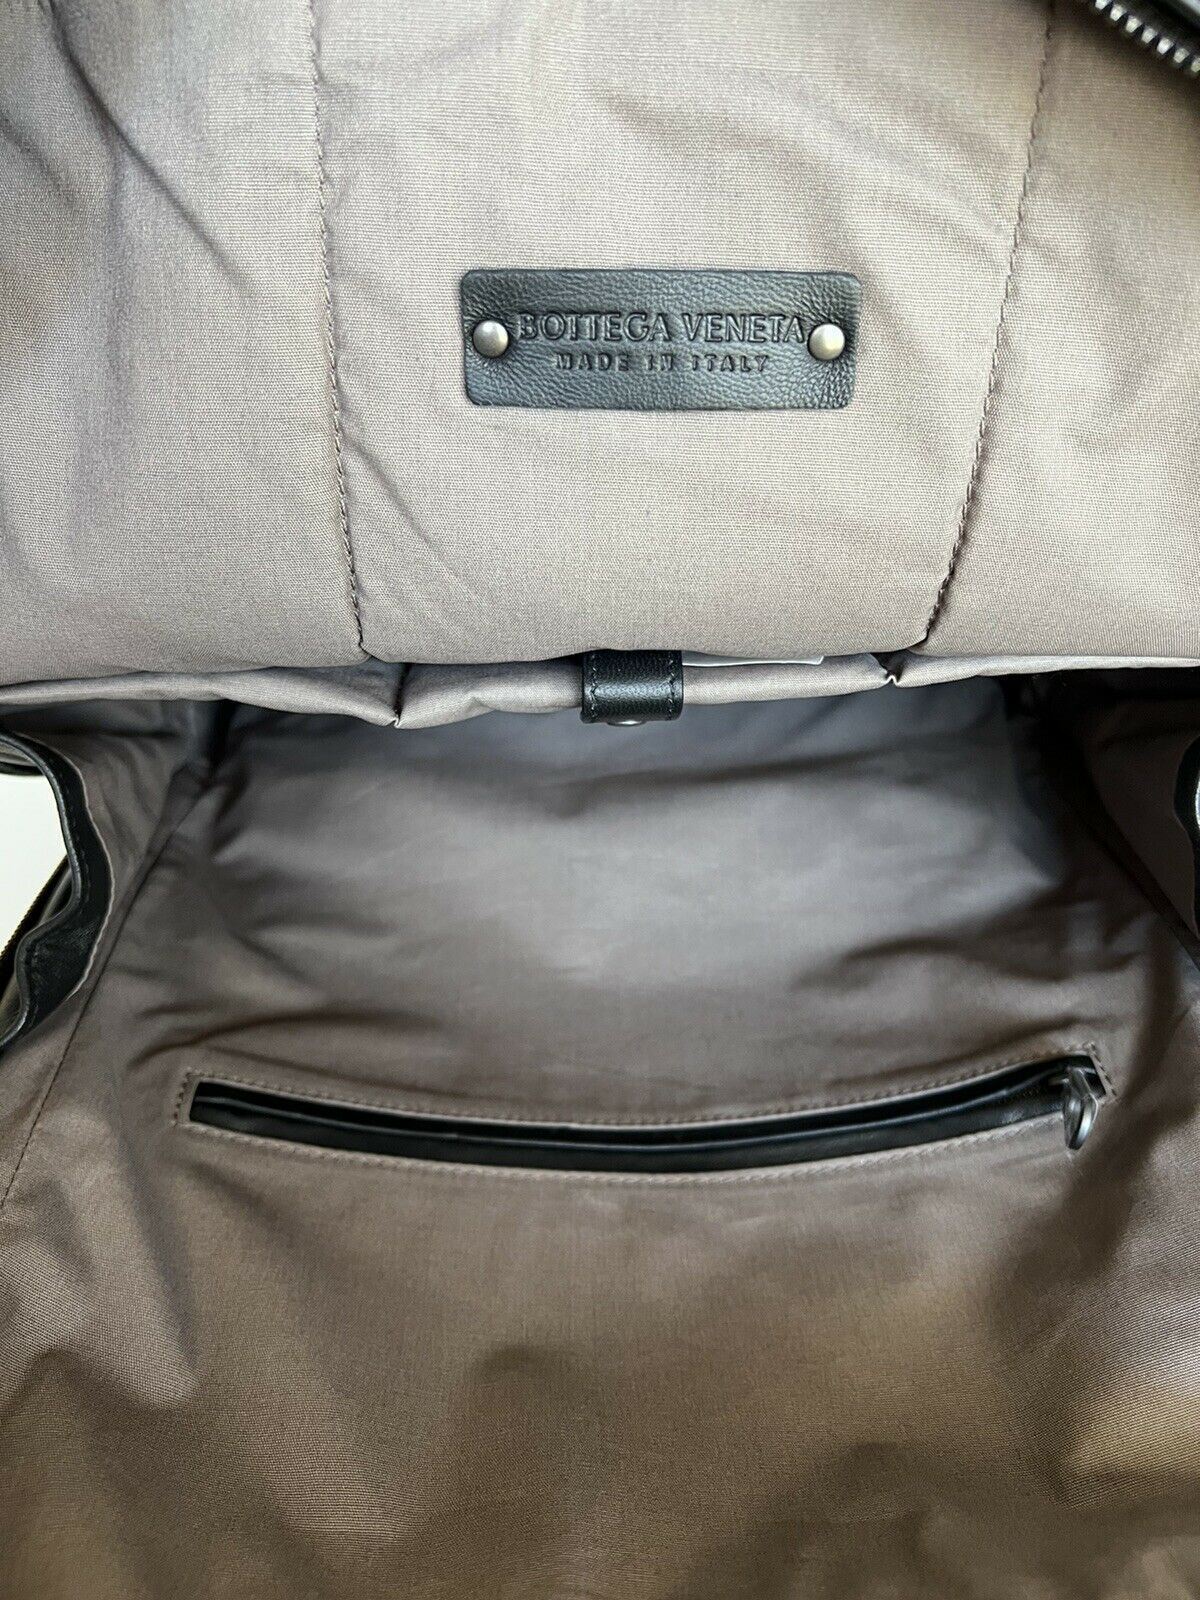 NWT $2870 Bottega Veneta Leather Intrecciato Backpack Black Made in Italy 493805